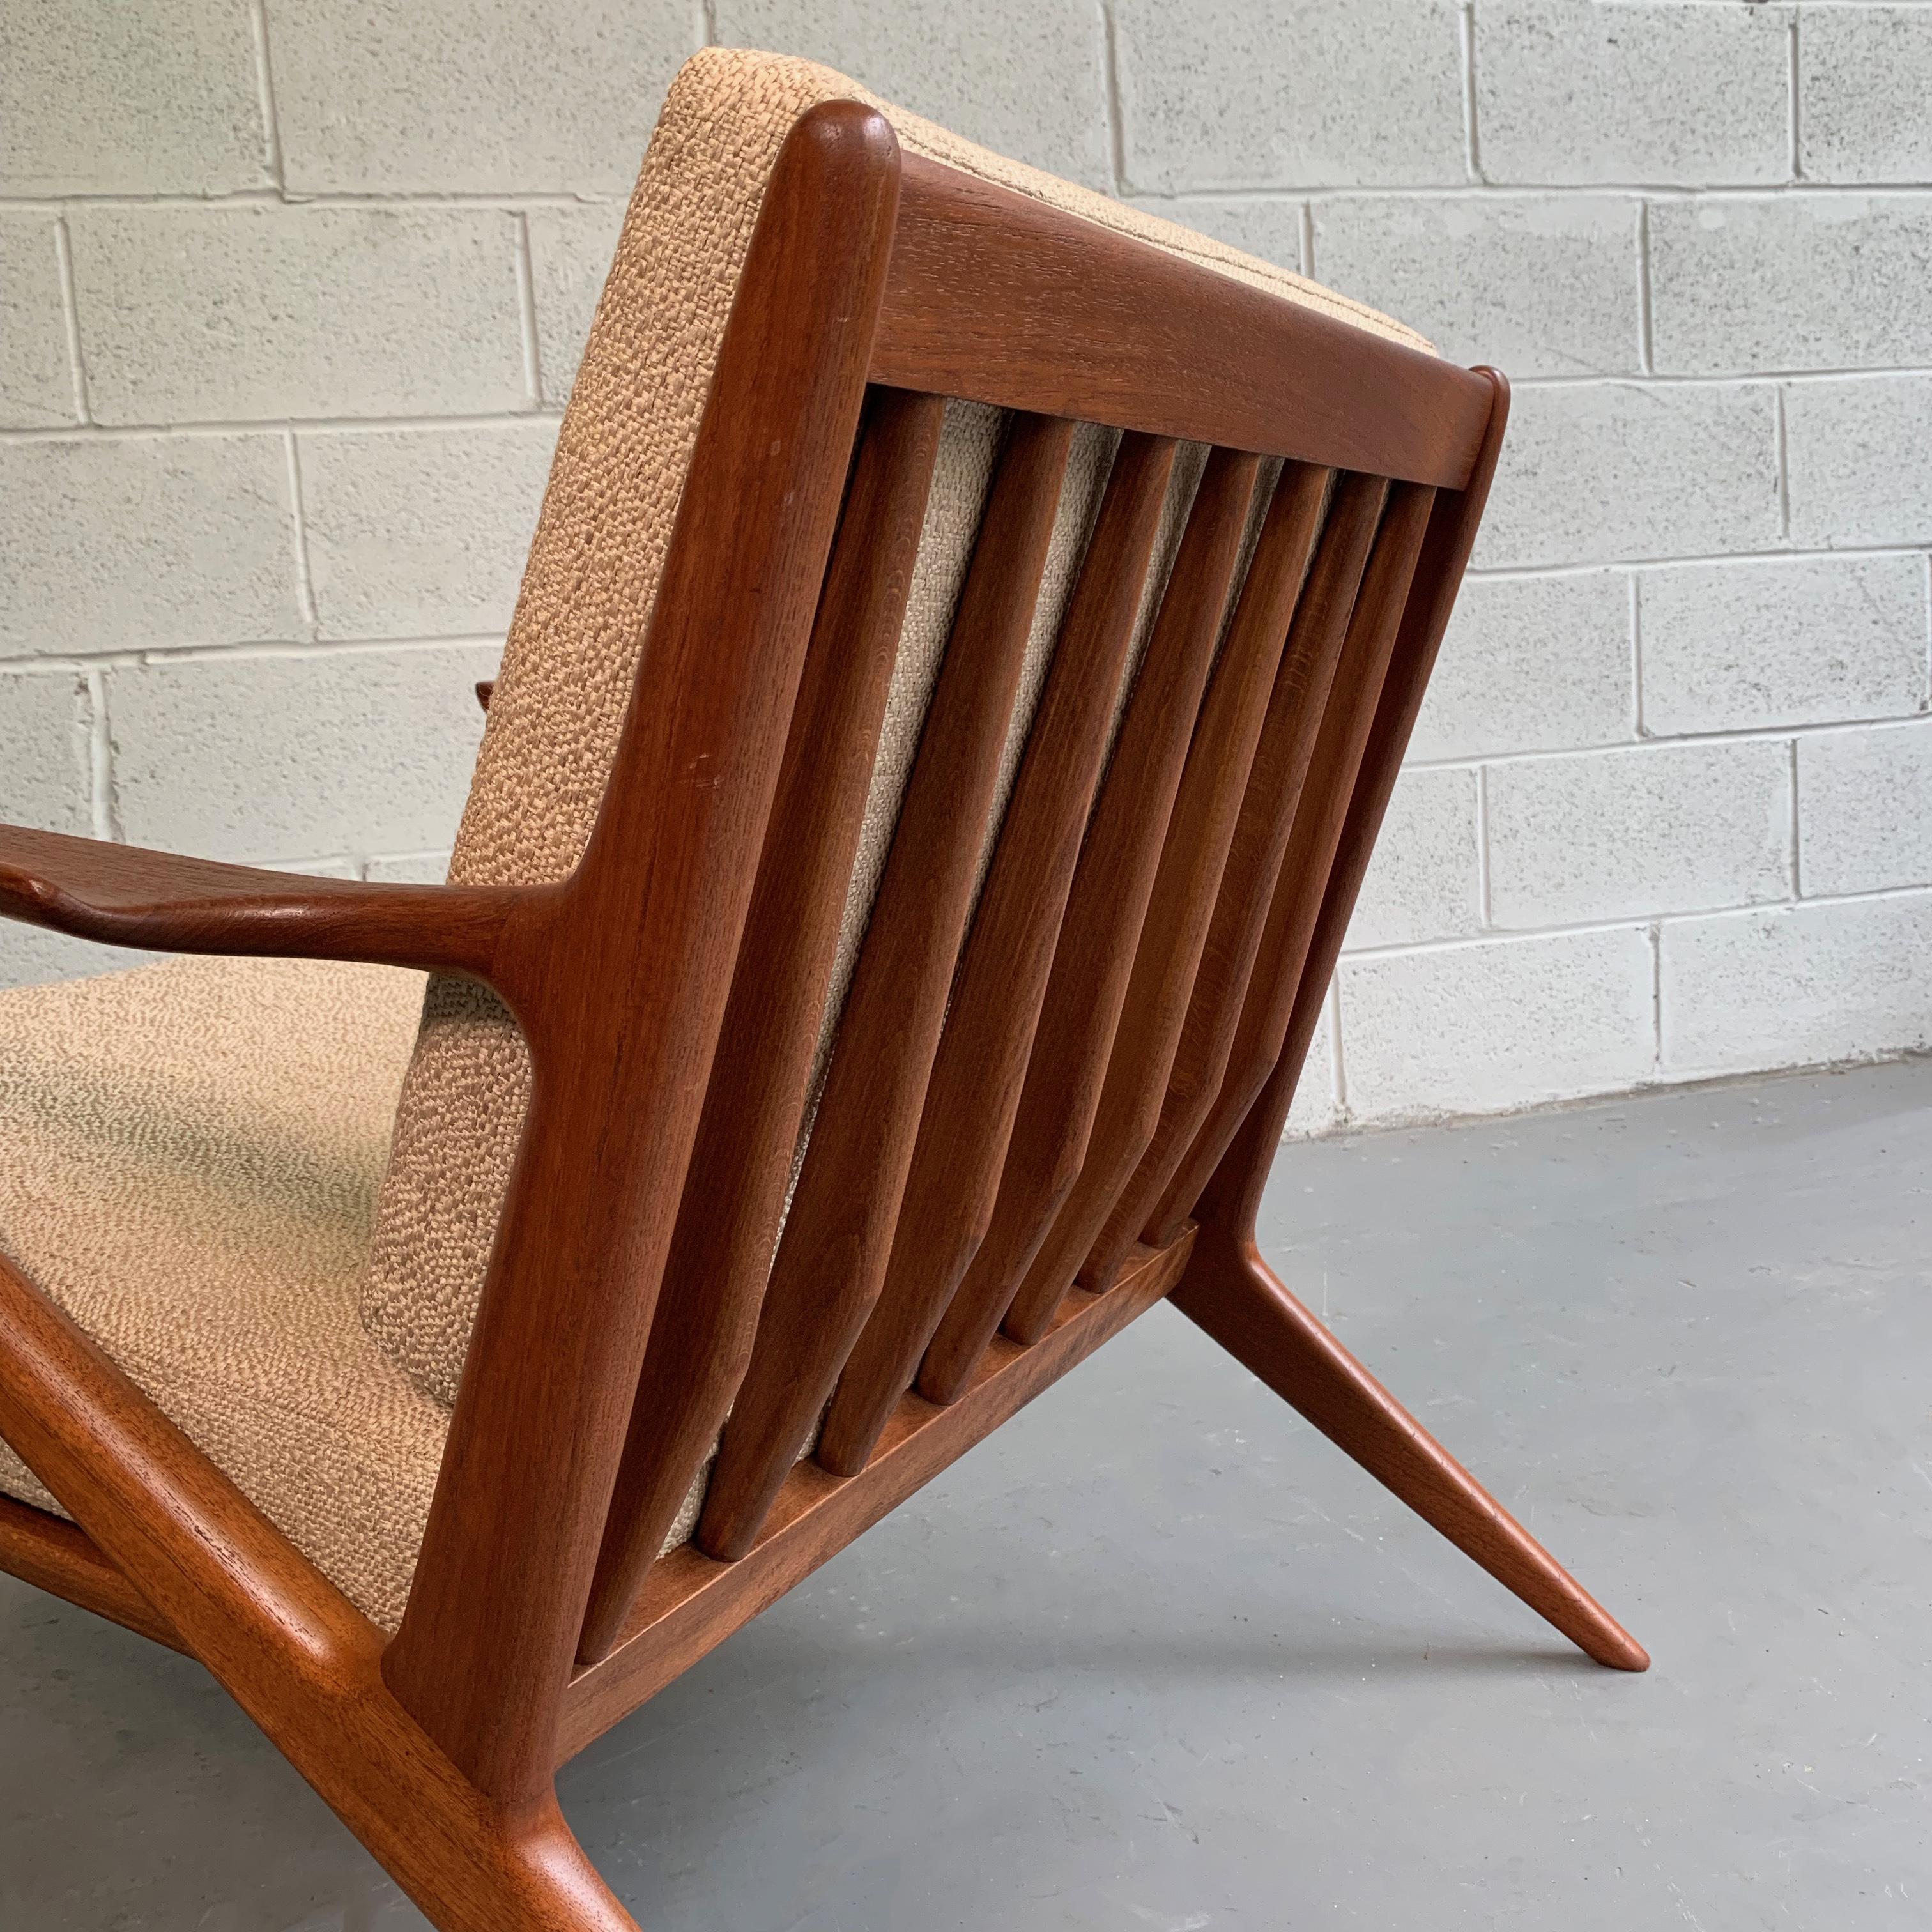 20th Century Scandinavian Modern Z Lounge Chair Designed by Poul Jensen